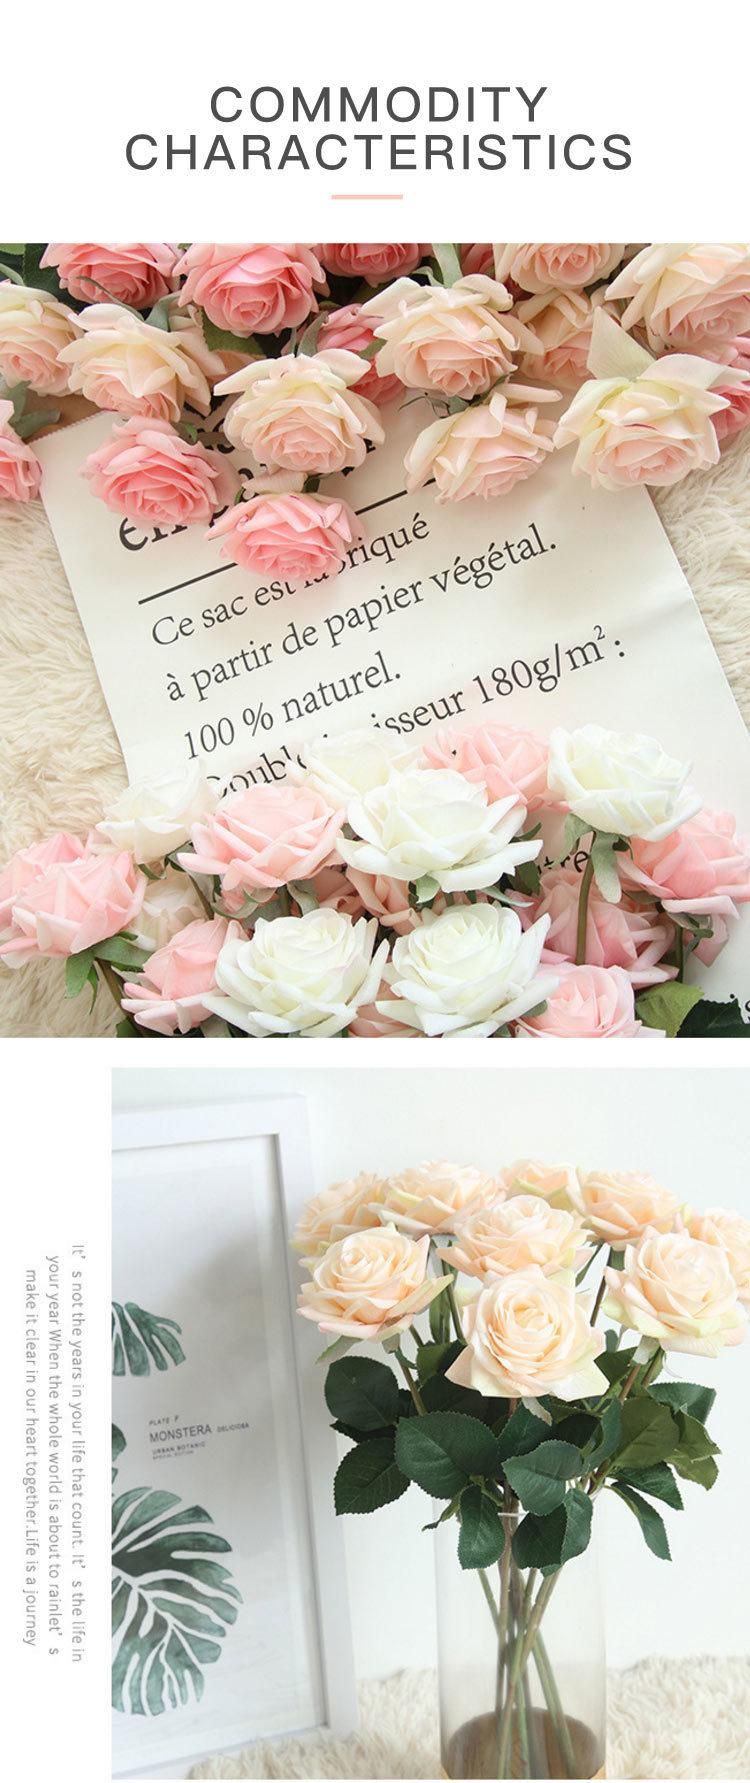 Artificial Silk Rose Flower Bouquet Wedding Party Home Decor, Pack of 10-Gradient Burgundy